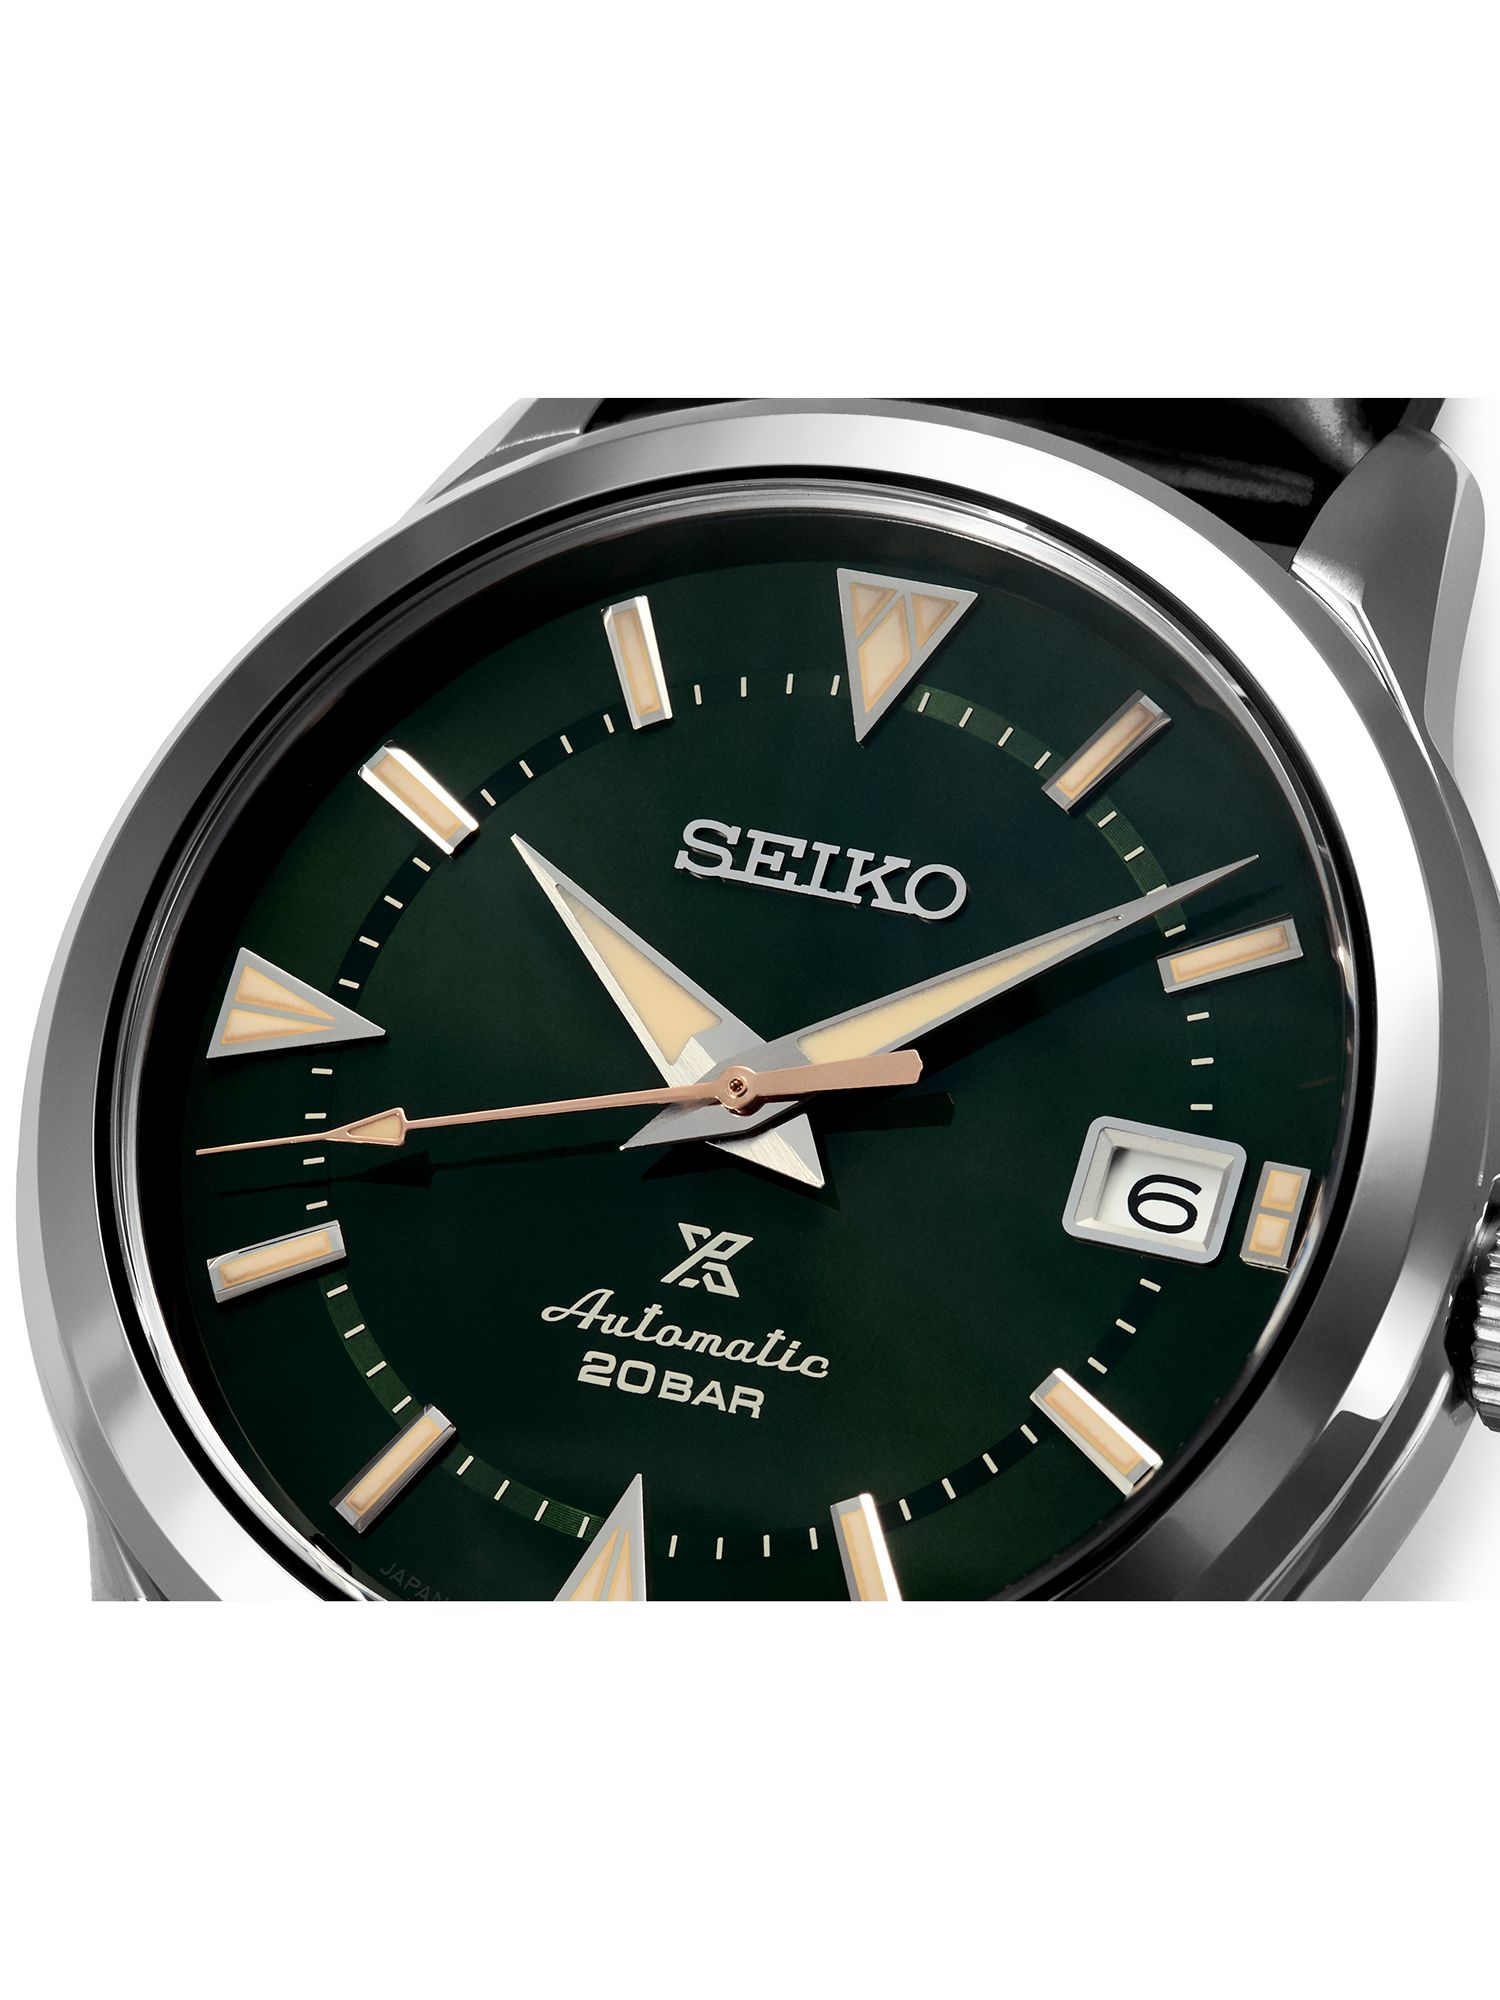 Seiko SPB249J1 Men's Prospex Alpinist Automatic Date Leather Strap Watch,  Black/Green at John Lewis & Partners